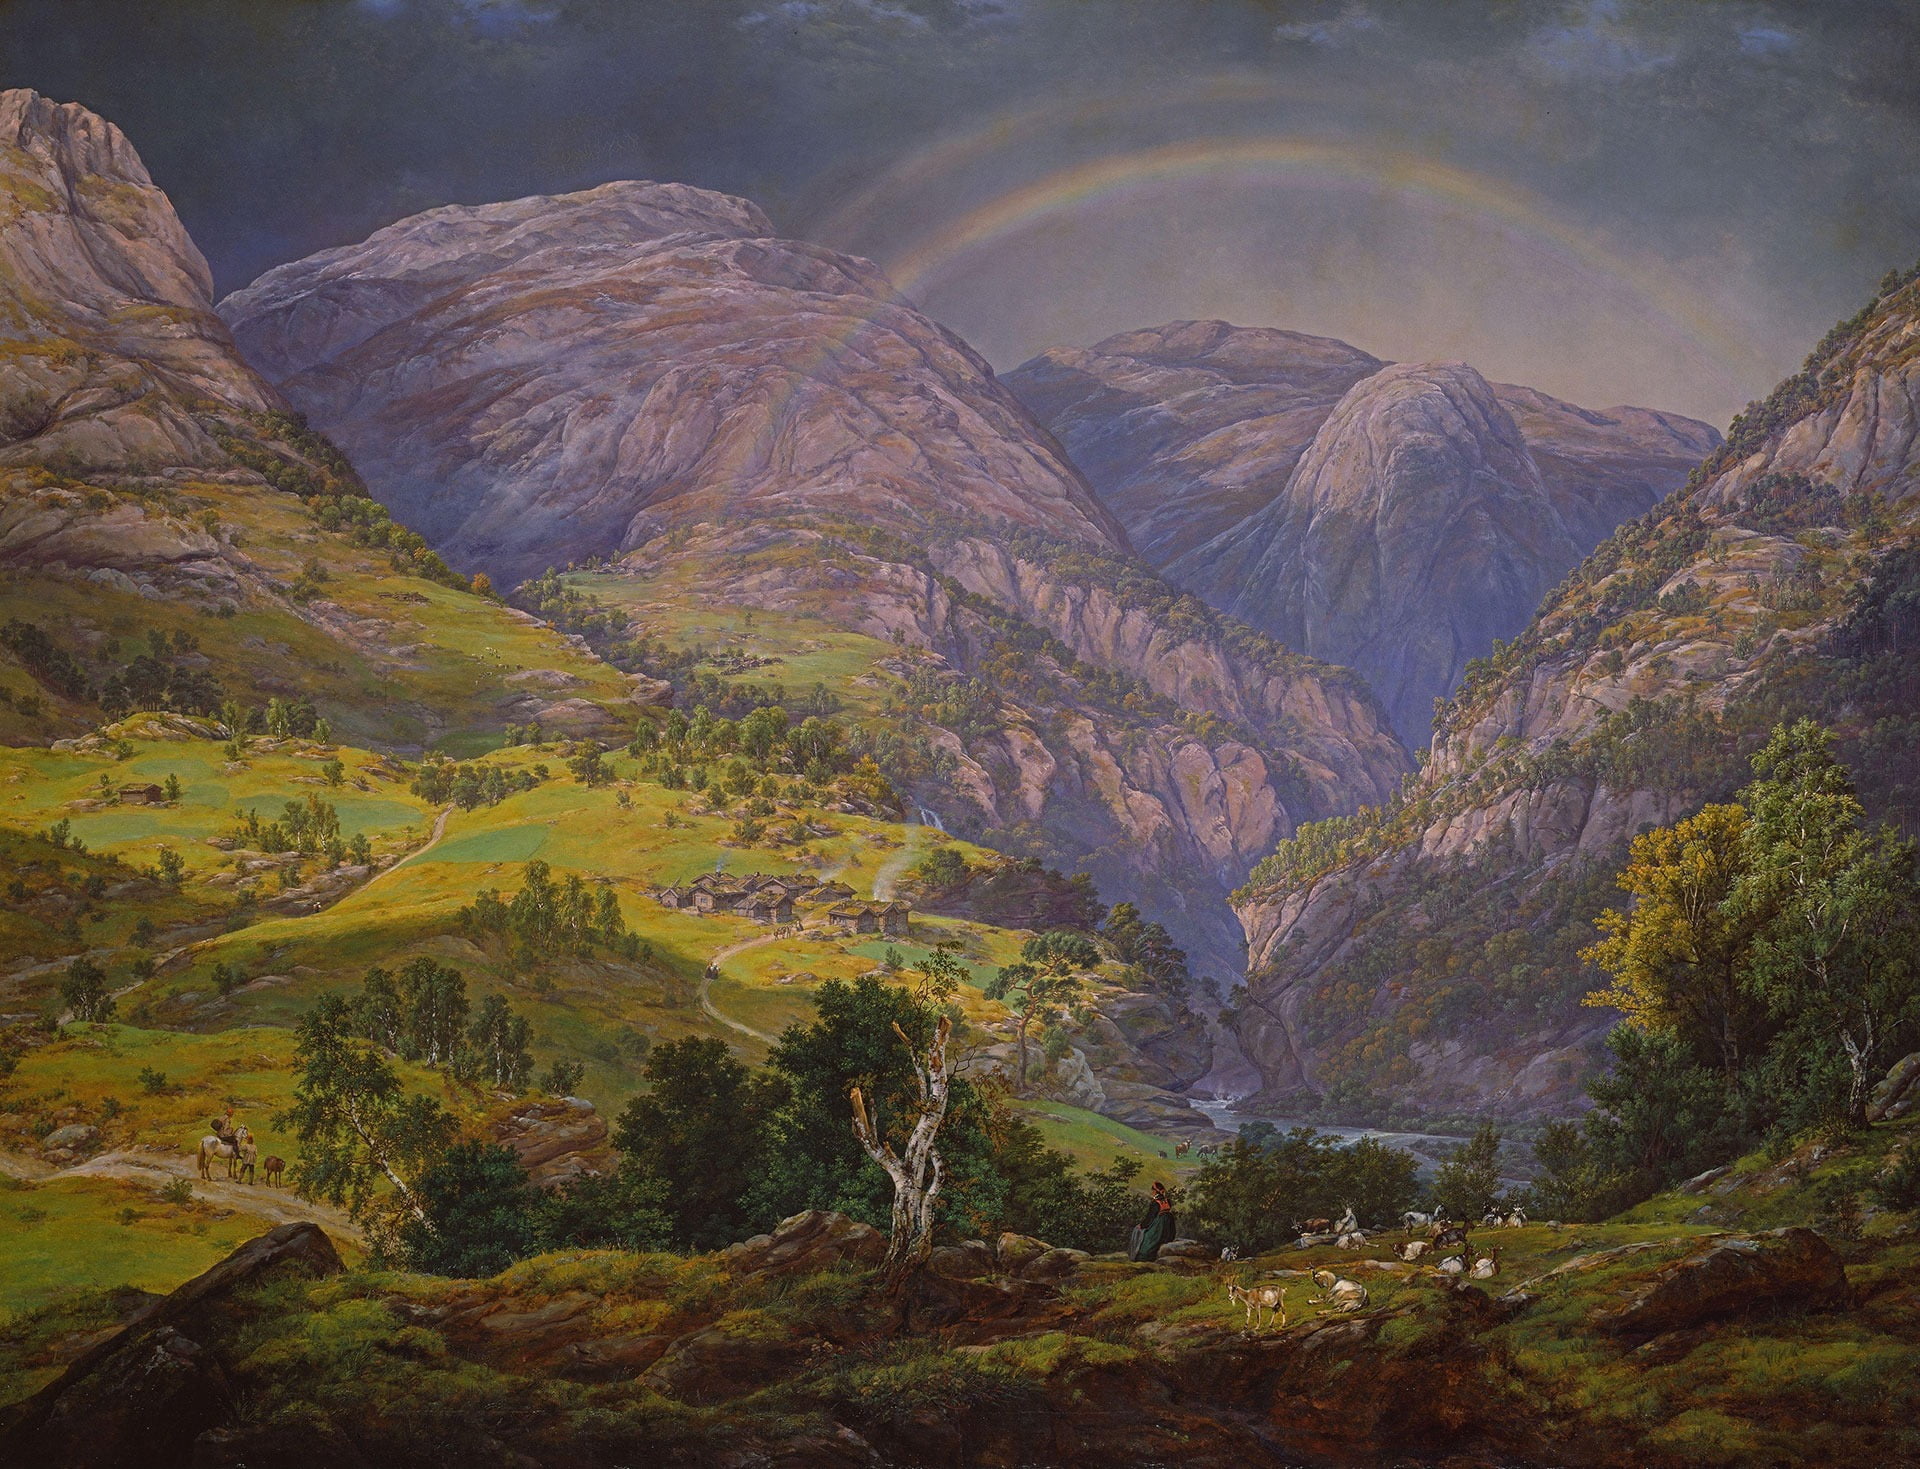 Natural landscape, Plant, Mountain, Ecoregion, Sky, Paint, Tree, Highland, Larch, Painting